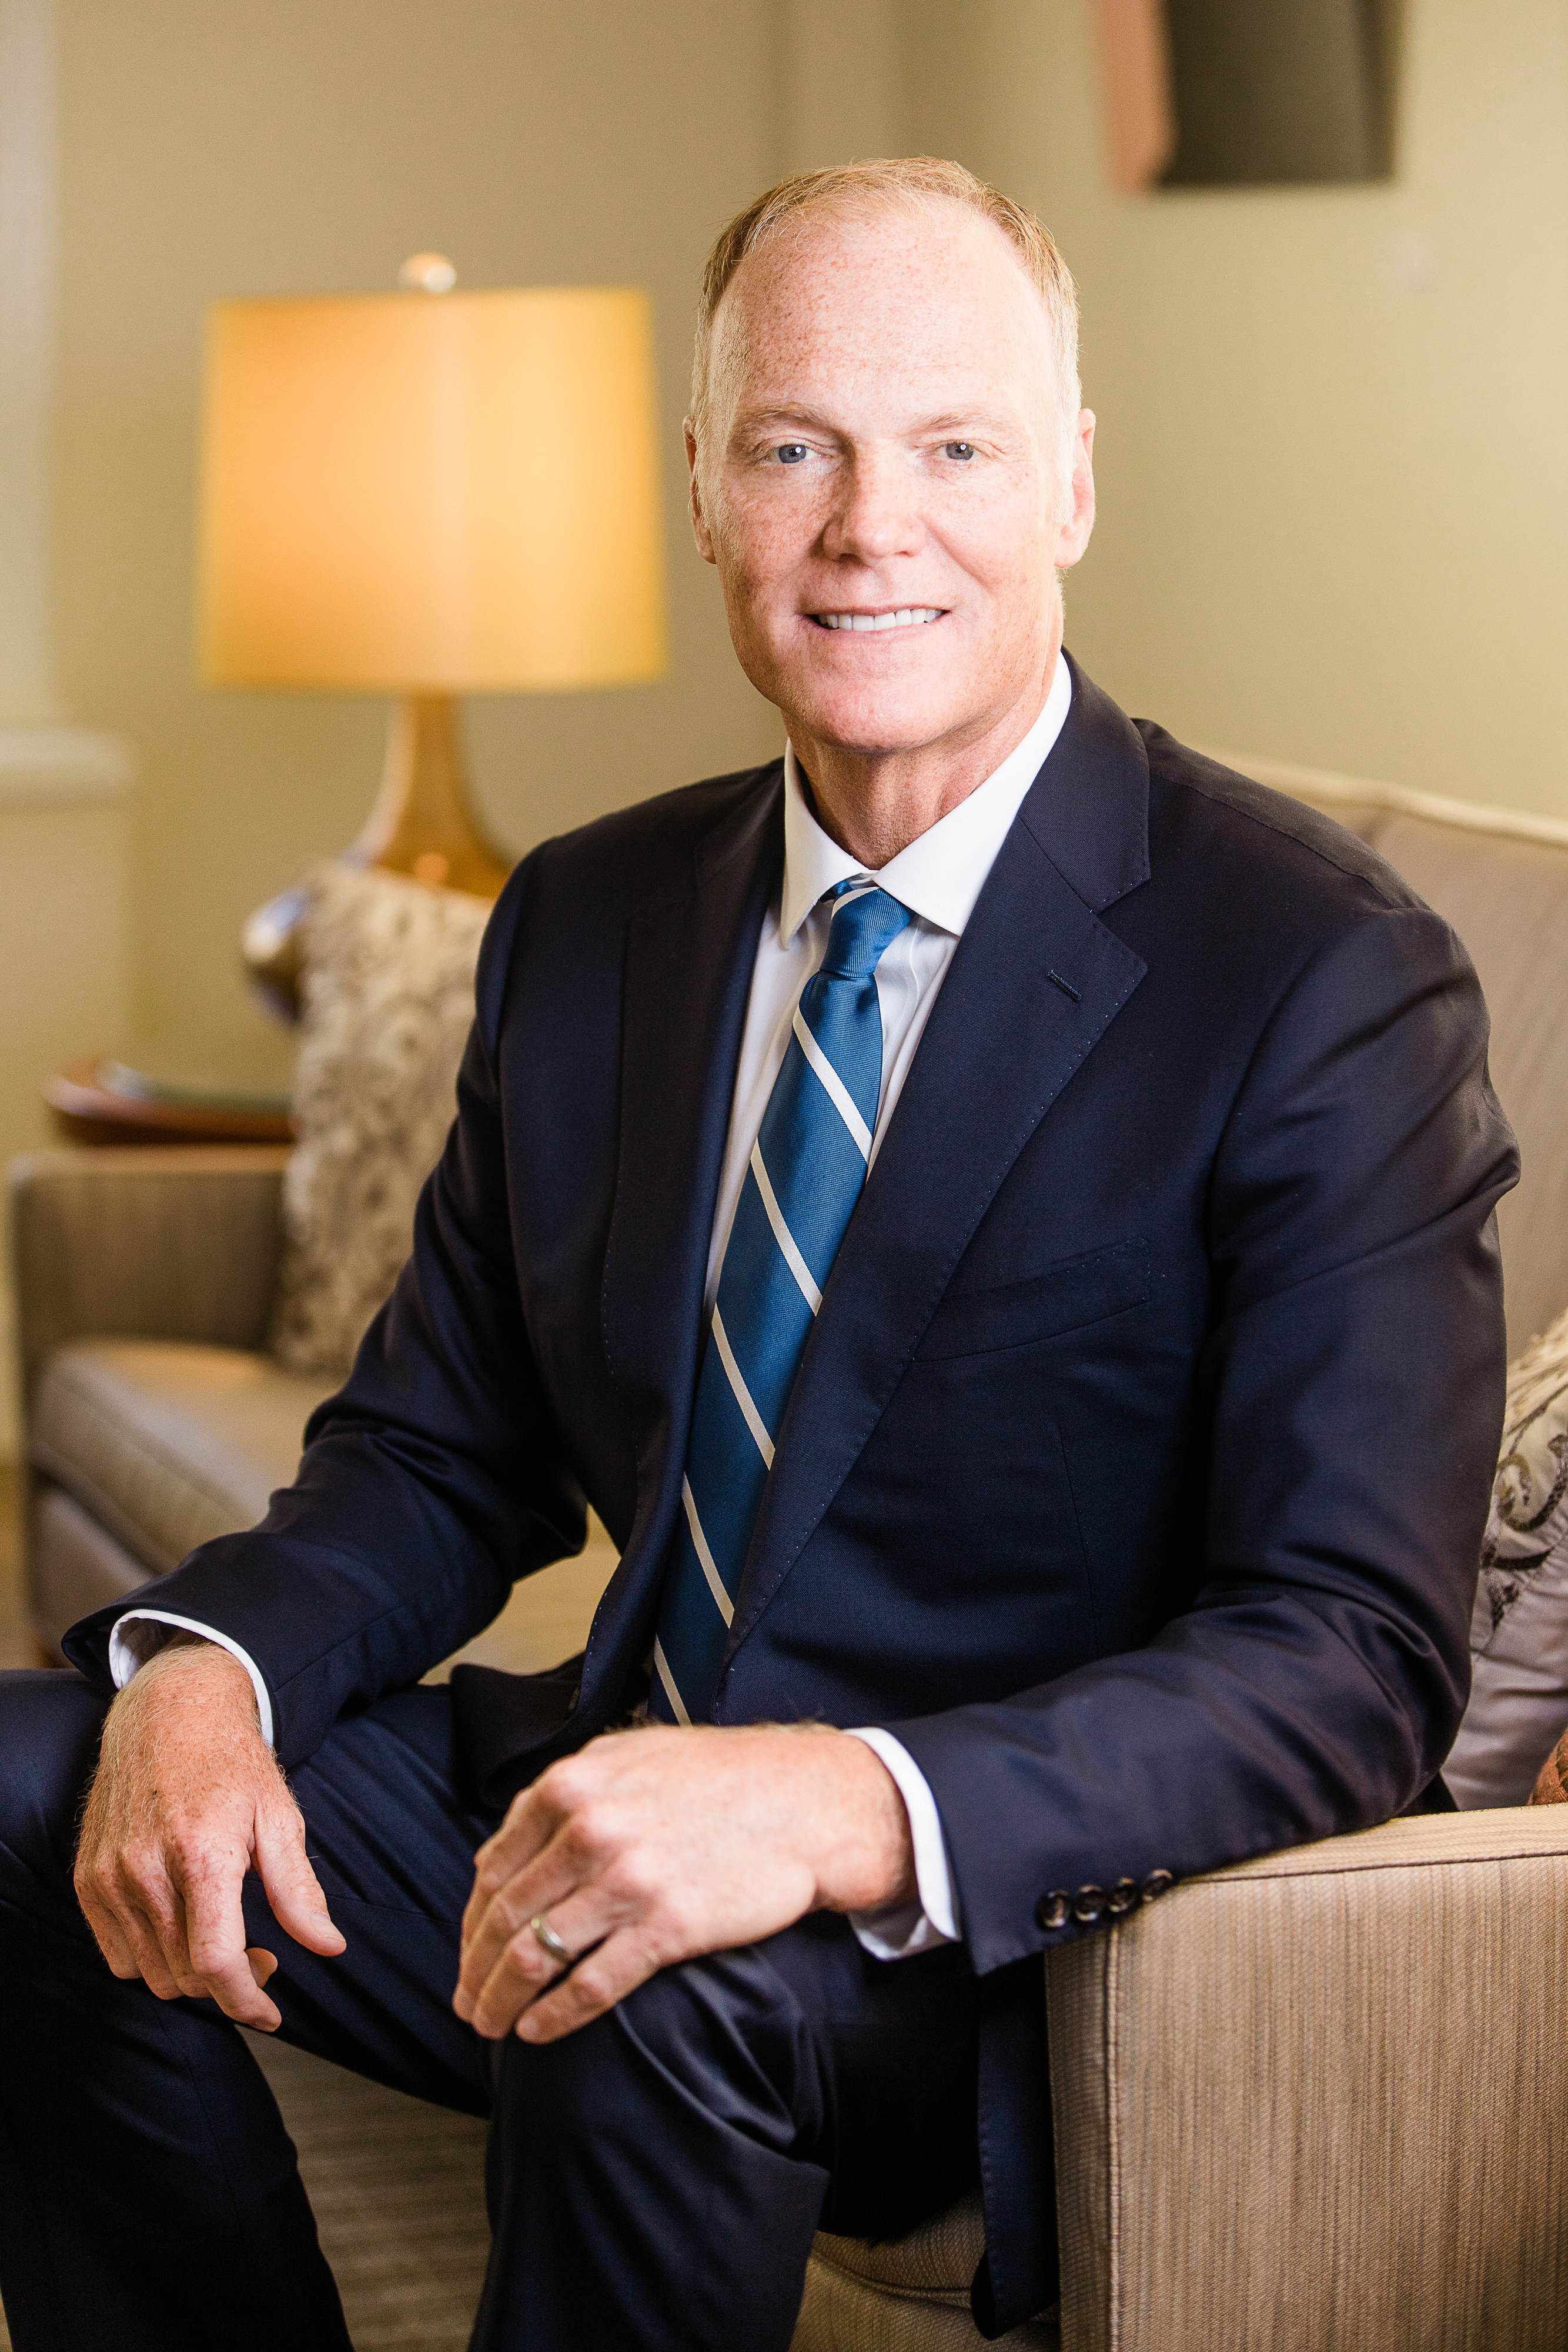 Scott Parrish Elected Chairman of Miller & Martin effective Nov. 1, 2019